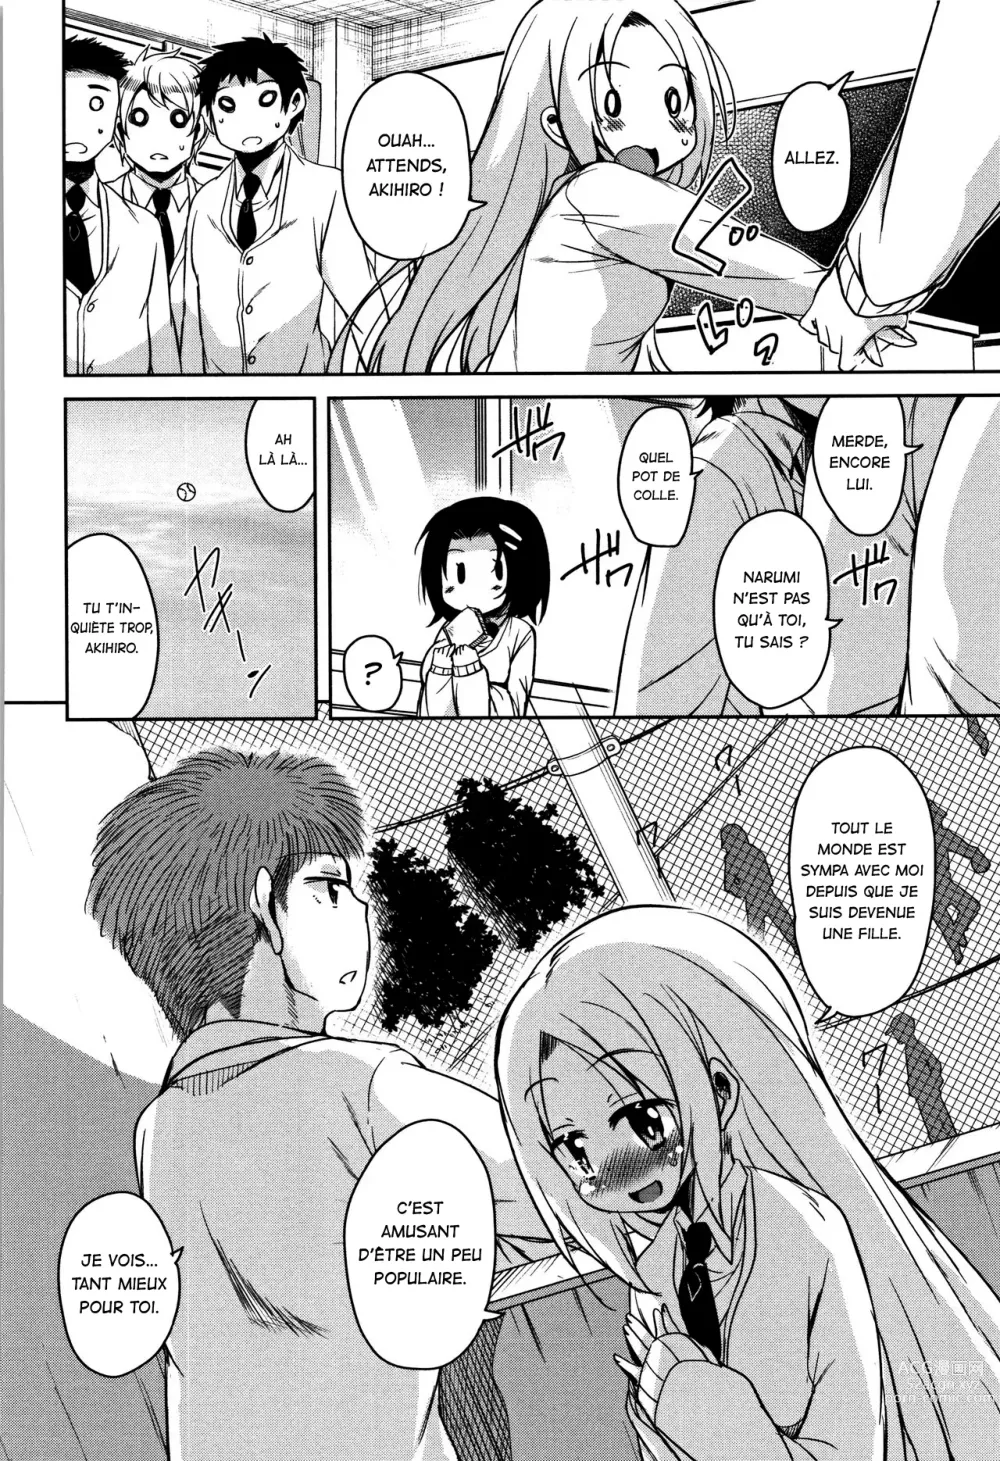 Page 27 of manga La dette TS de Narumi Chapitre d'Akihiro + Chapitre de Narumi + Chapitre de Kaoru